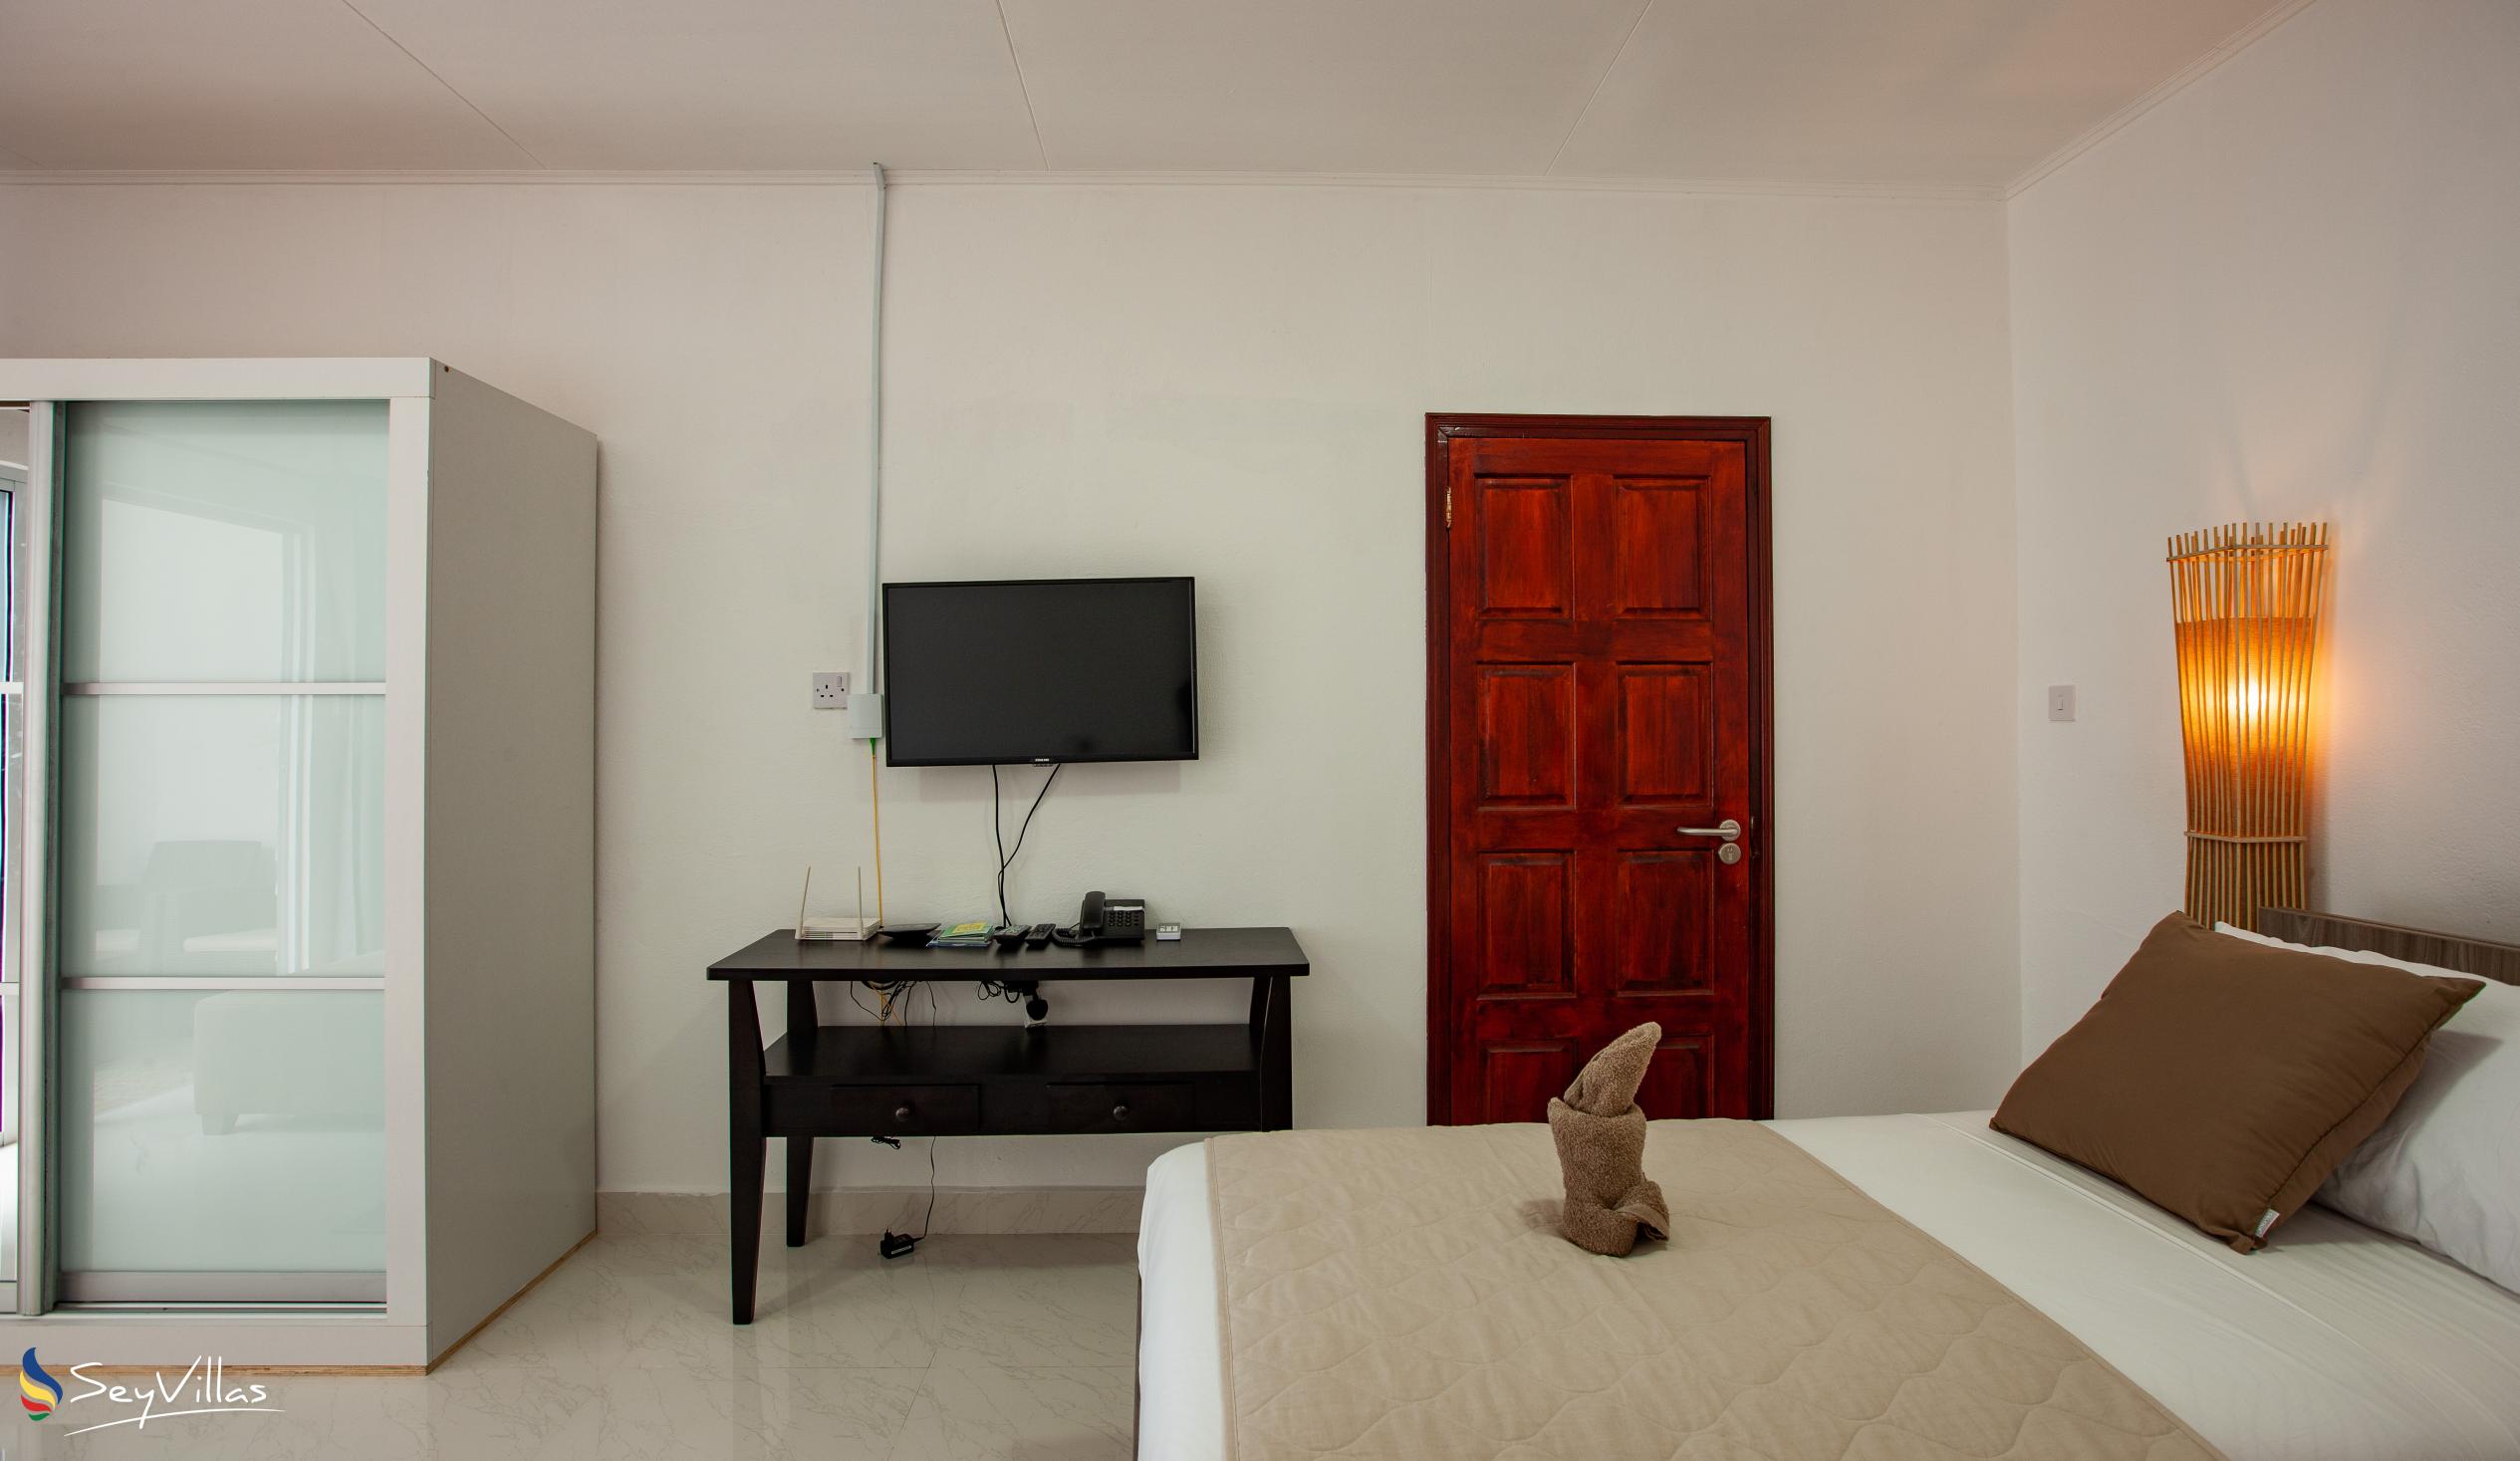 Foto 39: Hotel Plein Soleil - Chambre deux lits - Praslin (Seychelles)